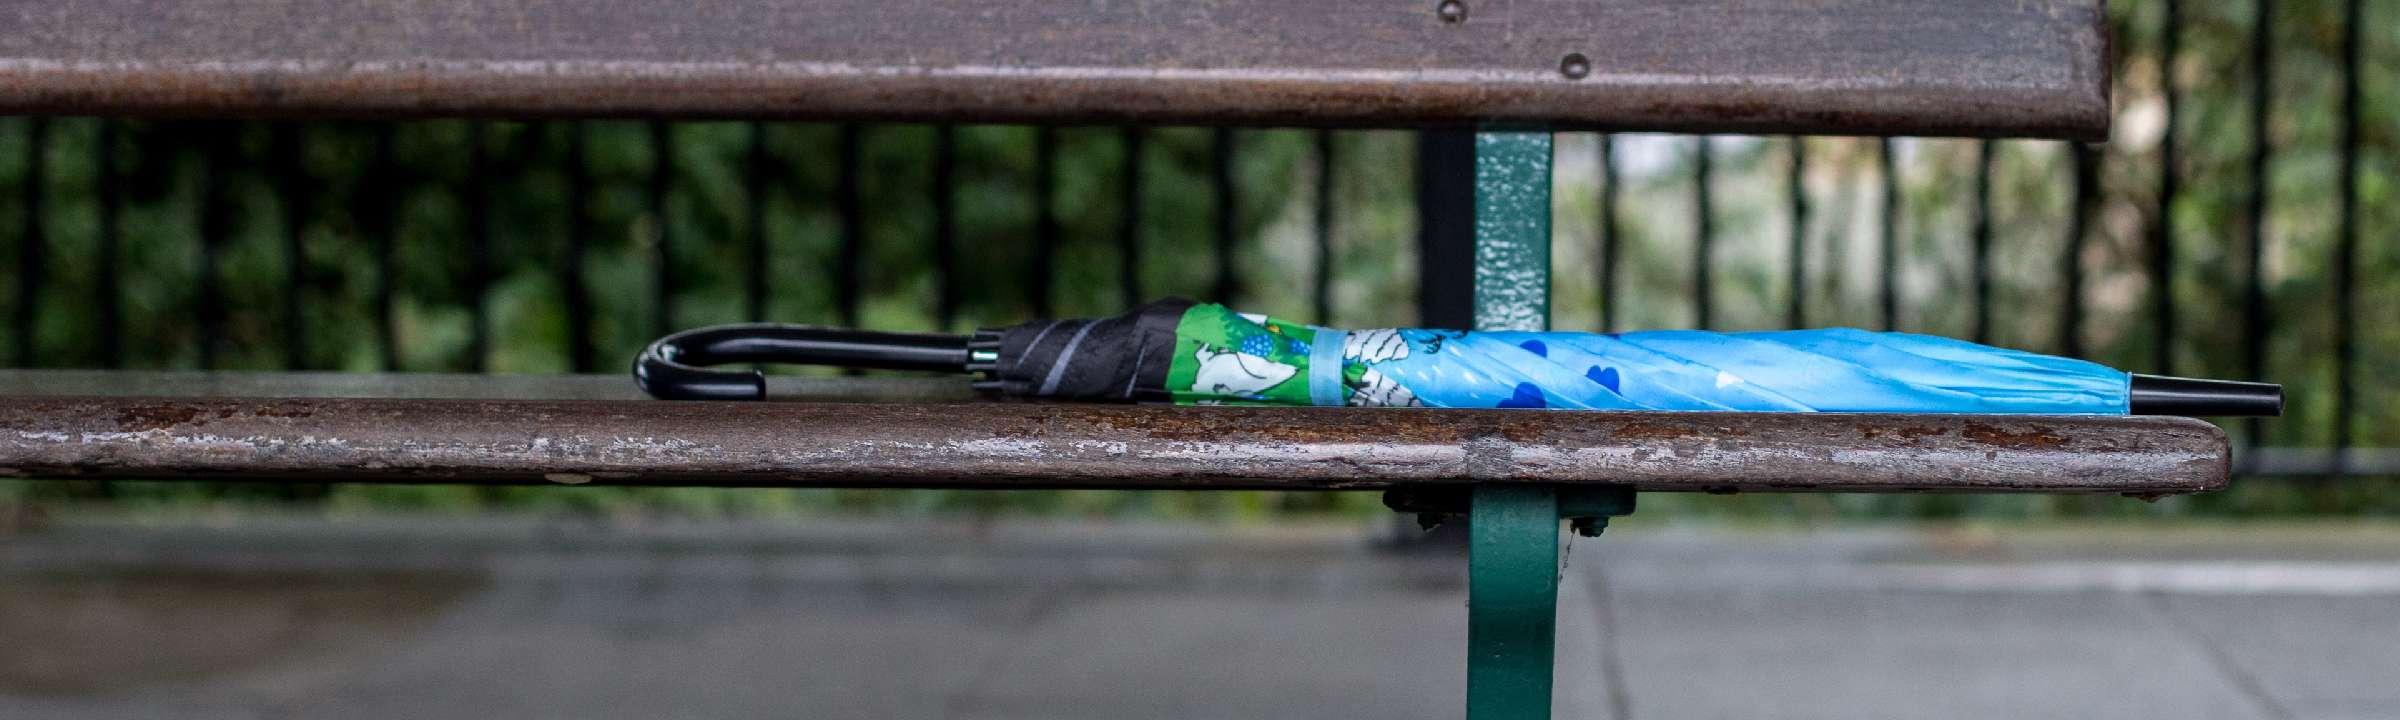 Lost umbrella left on a park bench